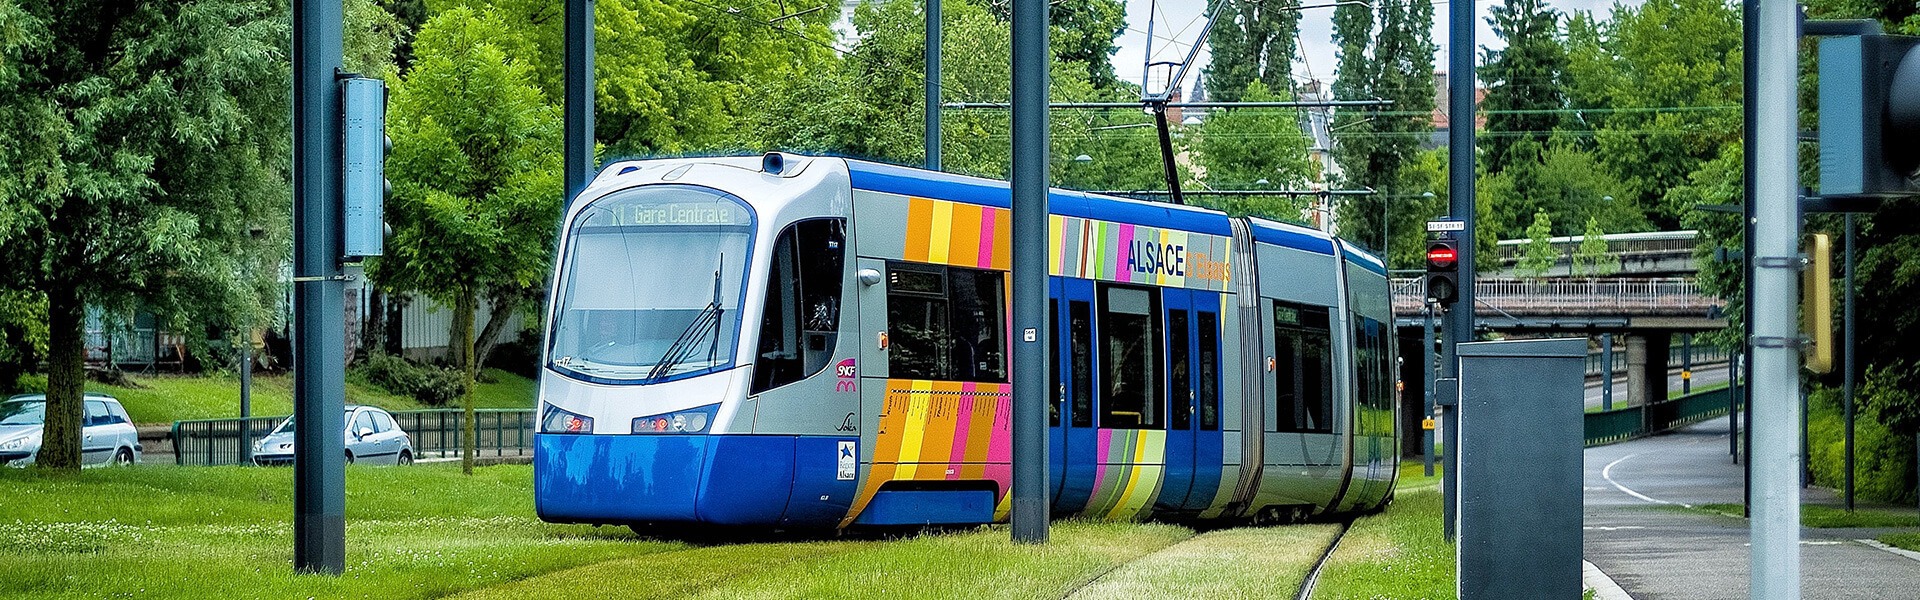 Tram-train Mulhouse